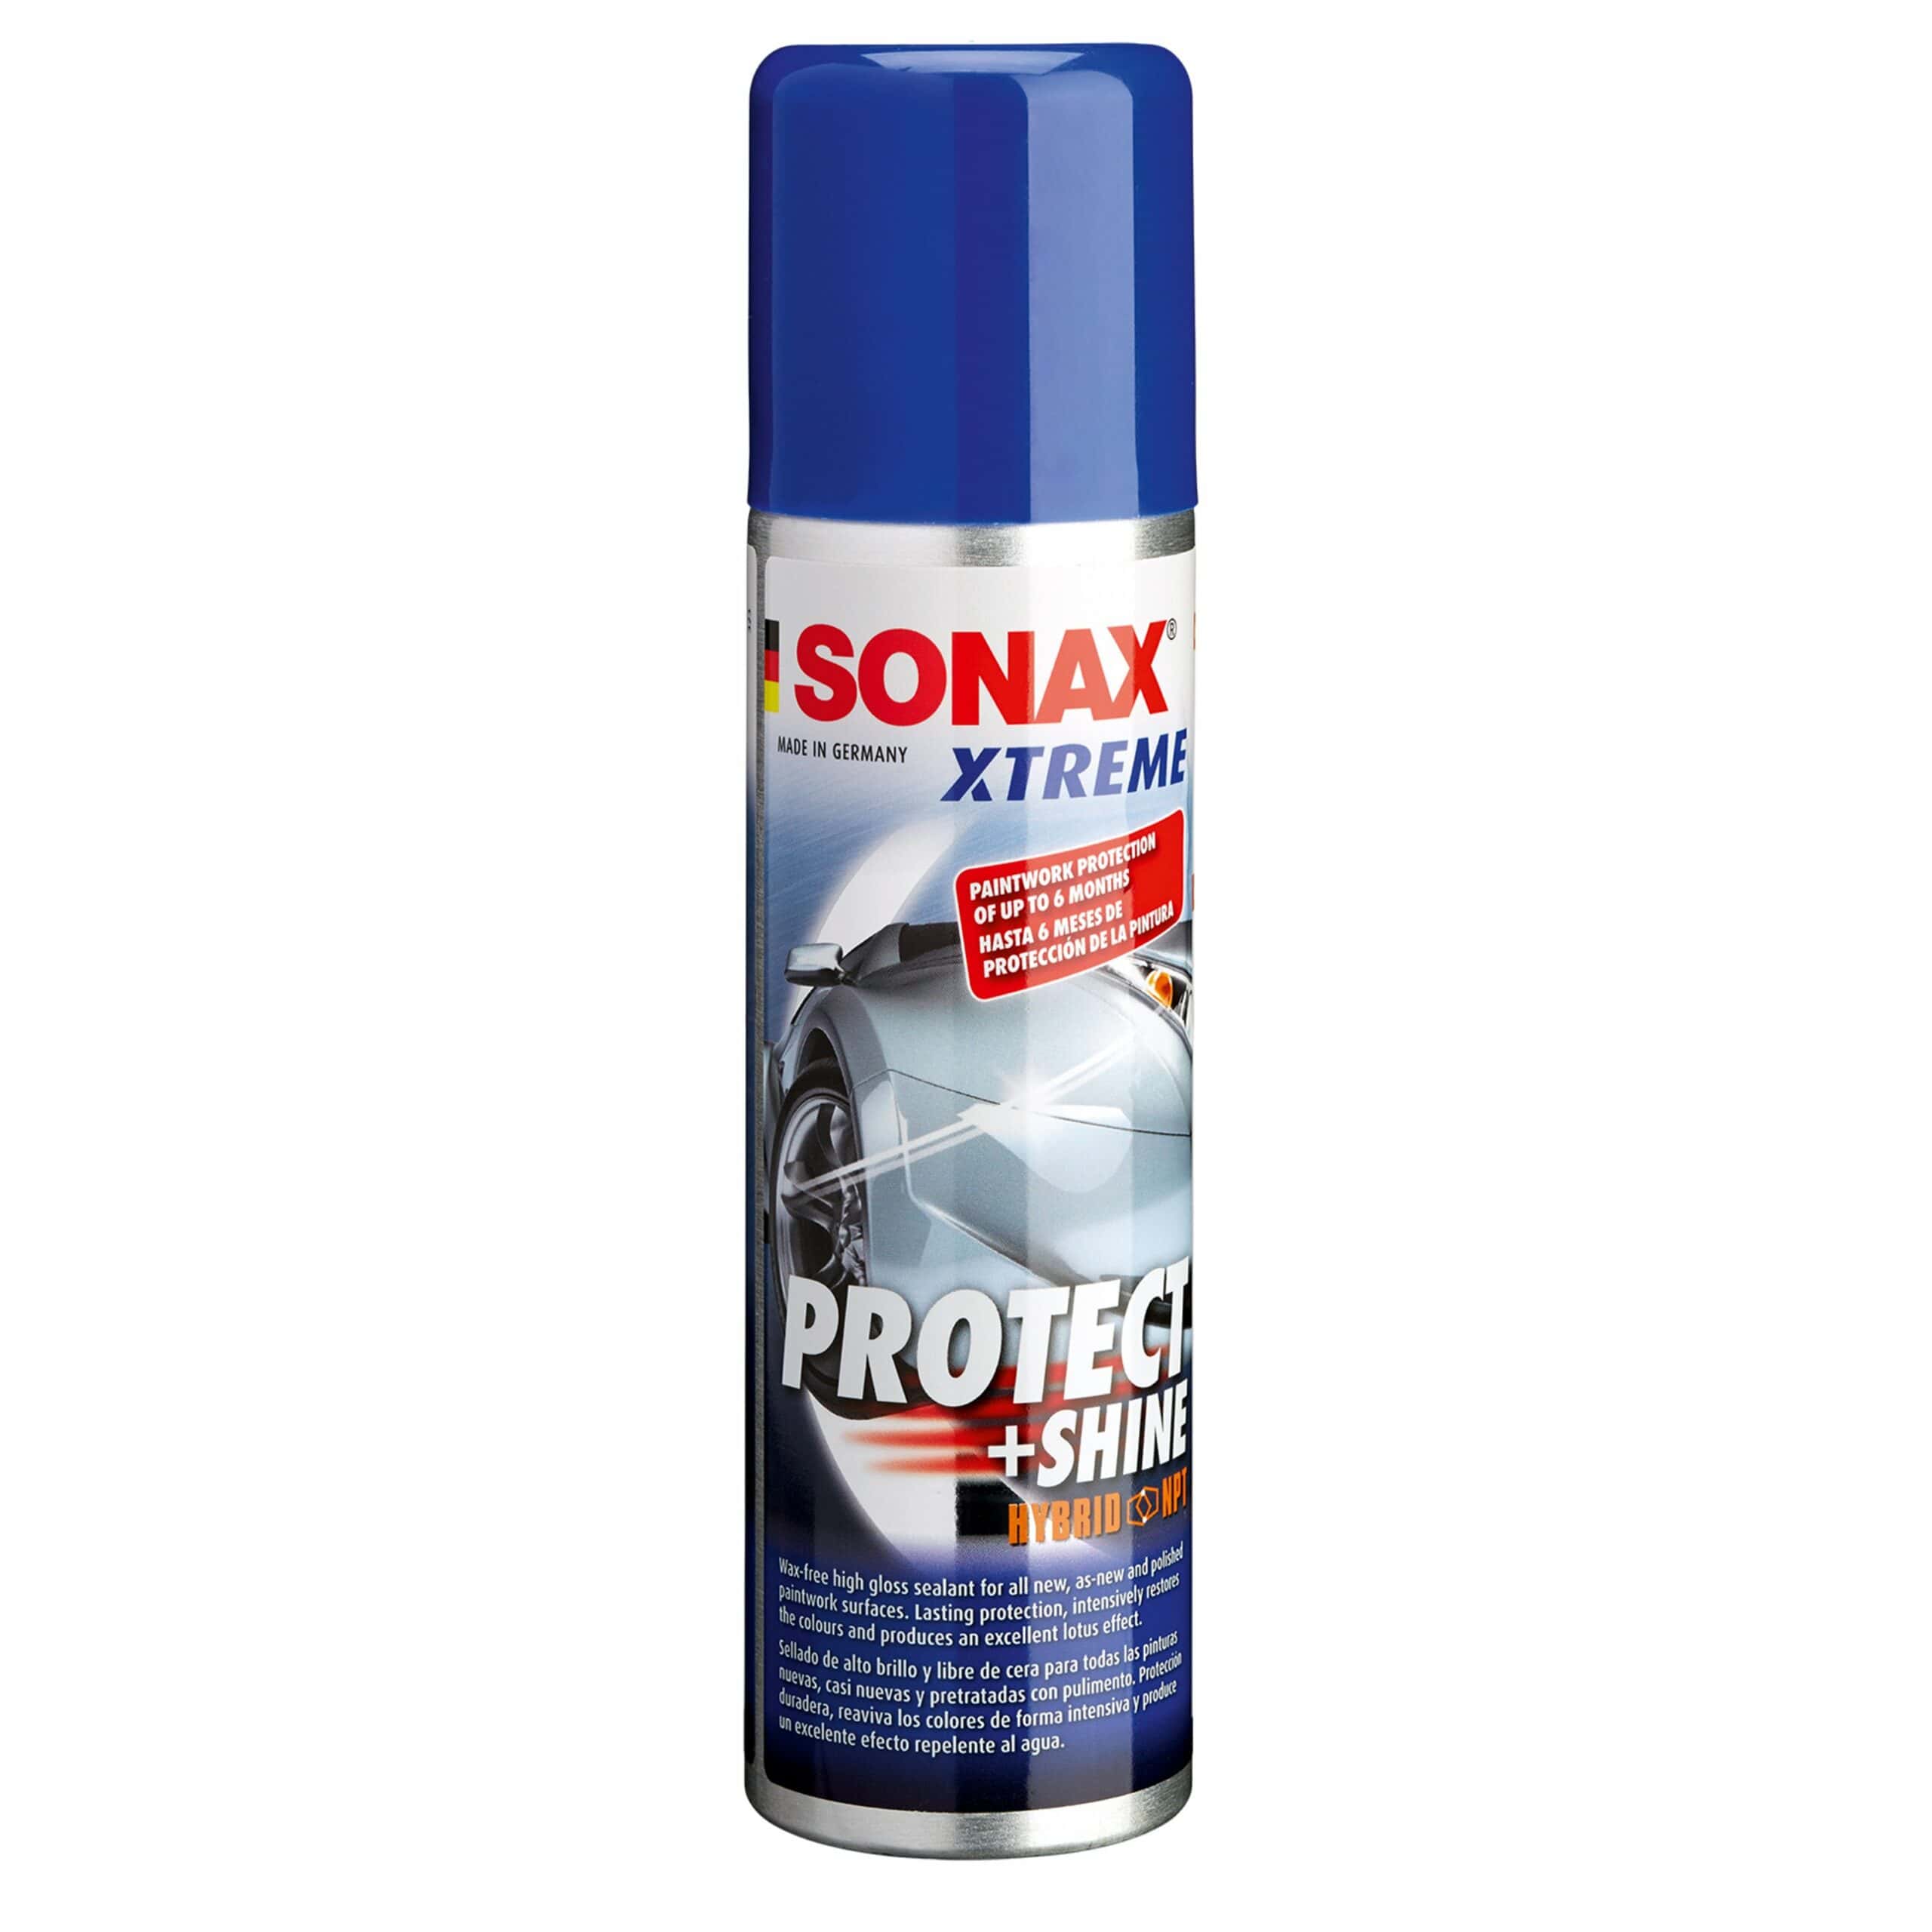 SONAX XTREME Protect + Shine Hybrid Sealant 210 ml